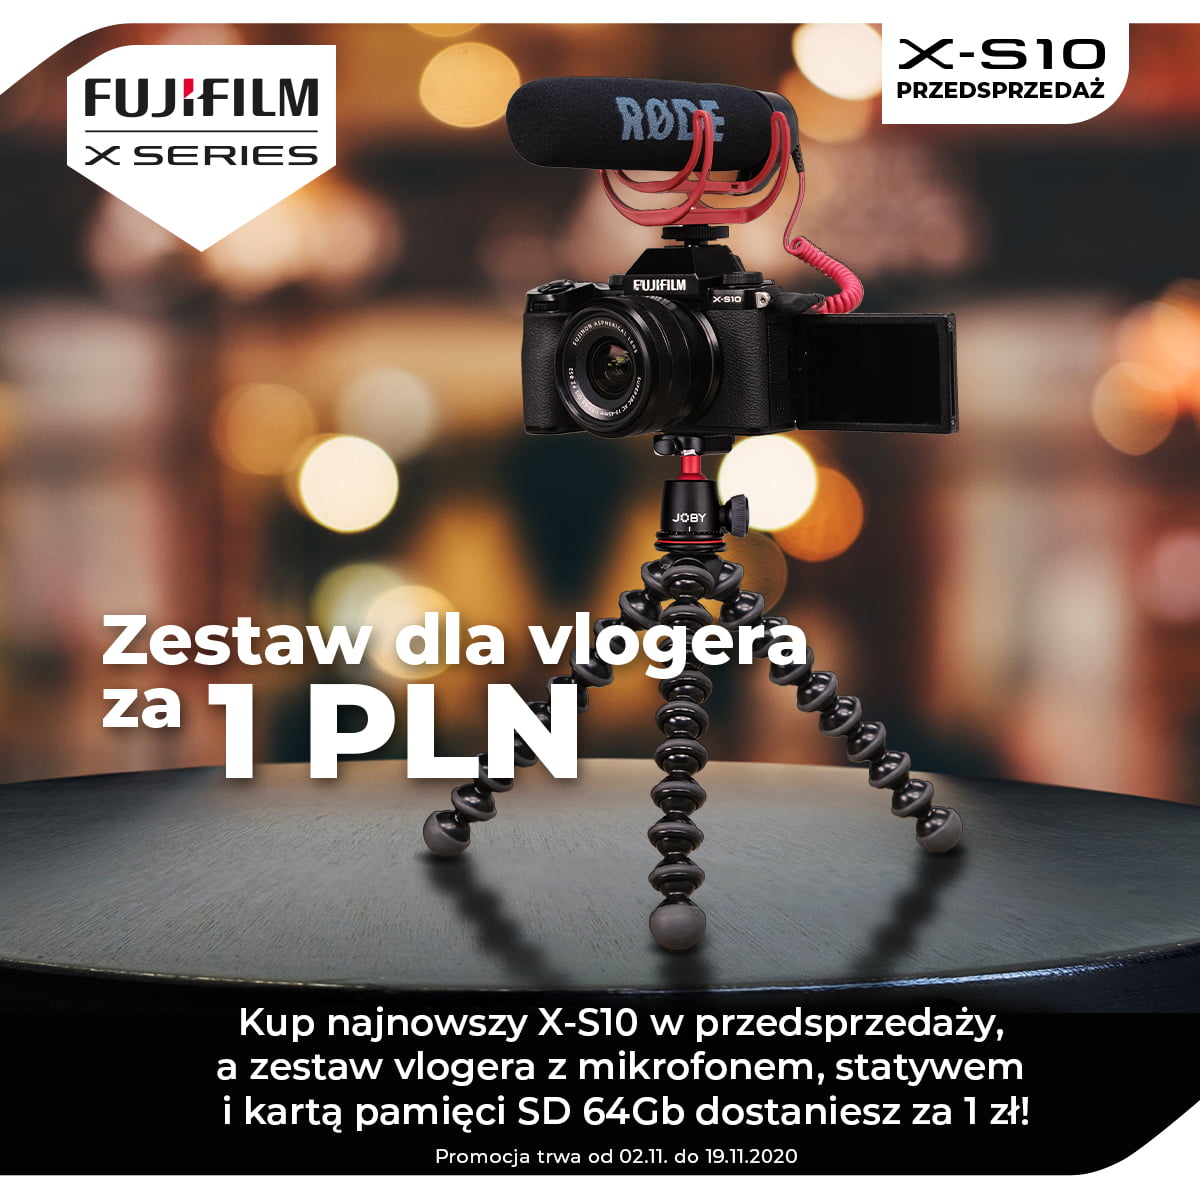 Fujifilm X-S10, Rode, Fujifilm, Promocja